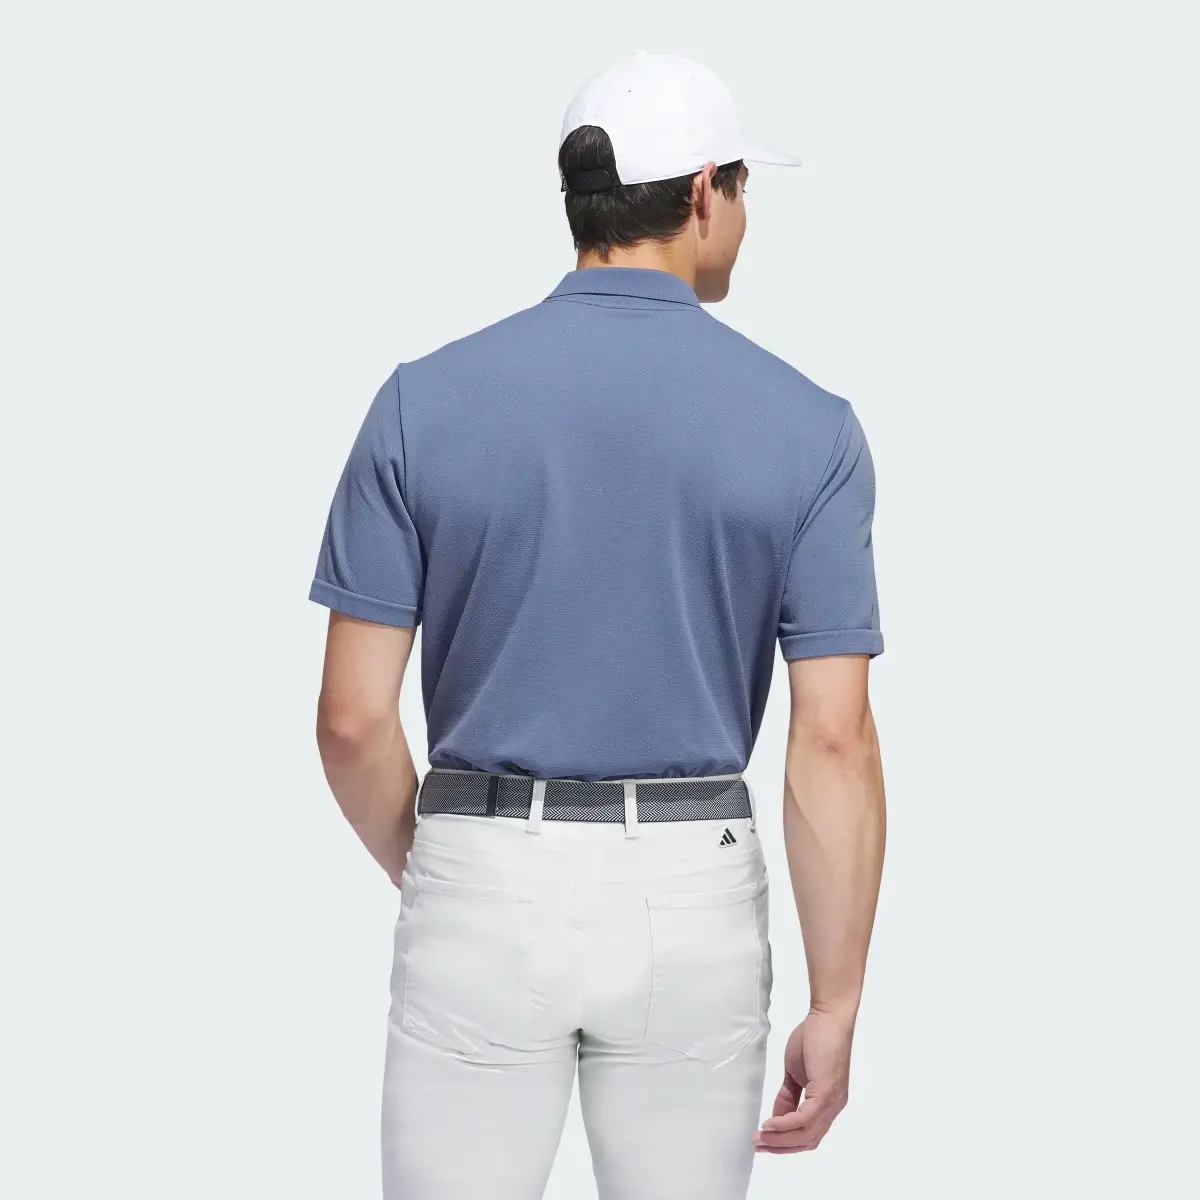 Adidas Ultimate365 Tour Primeknit Polo Shirt. 3